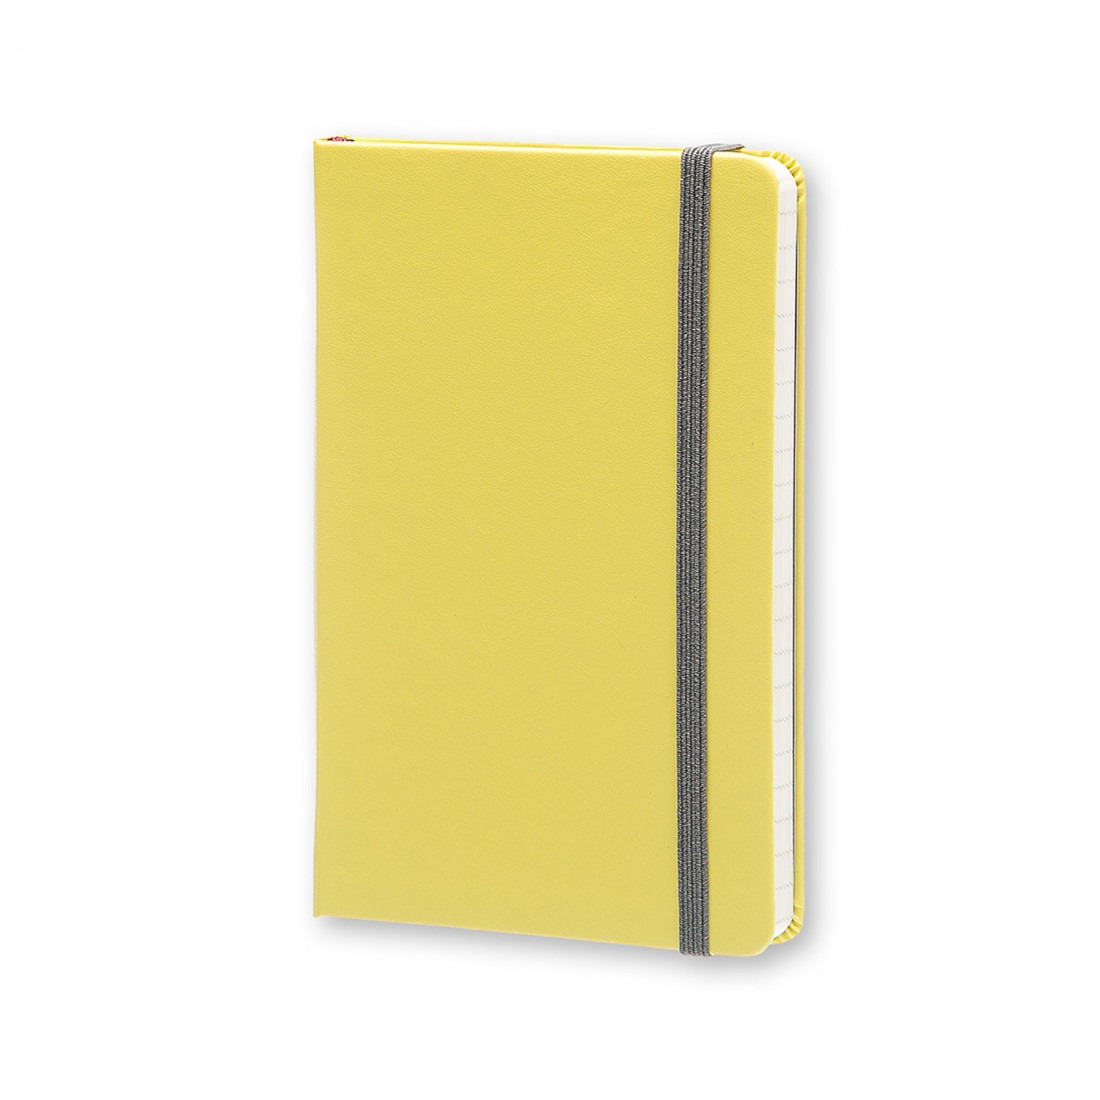 Notebook Pocket 9x14 Ruled Yellow Hard Cover Moleskine